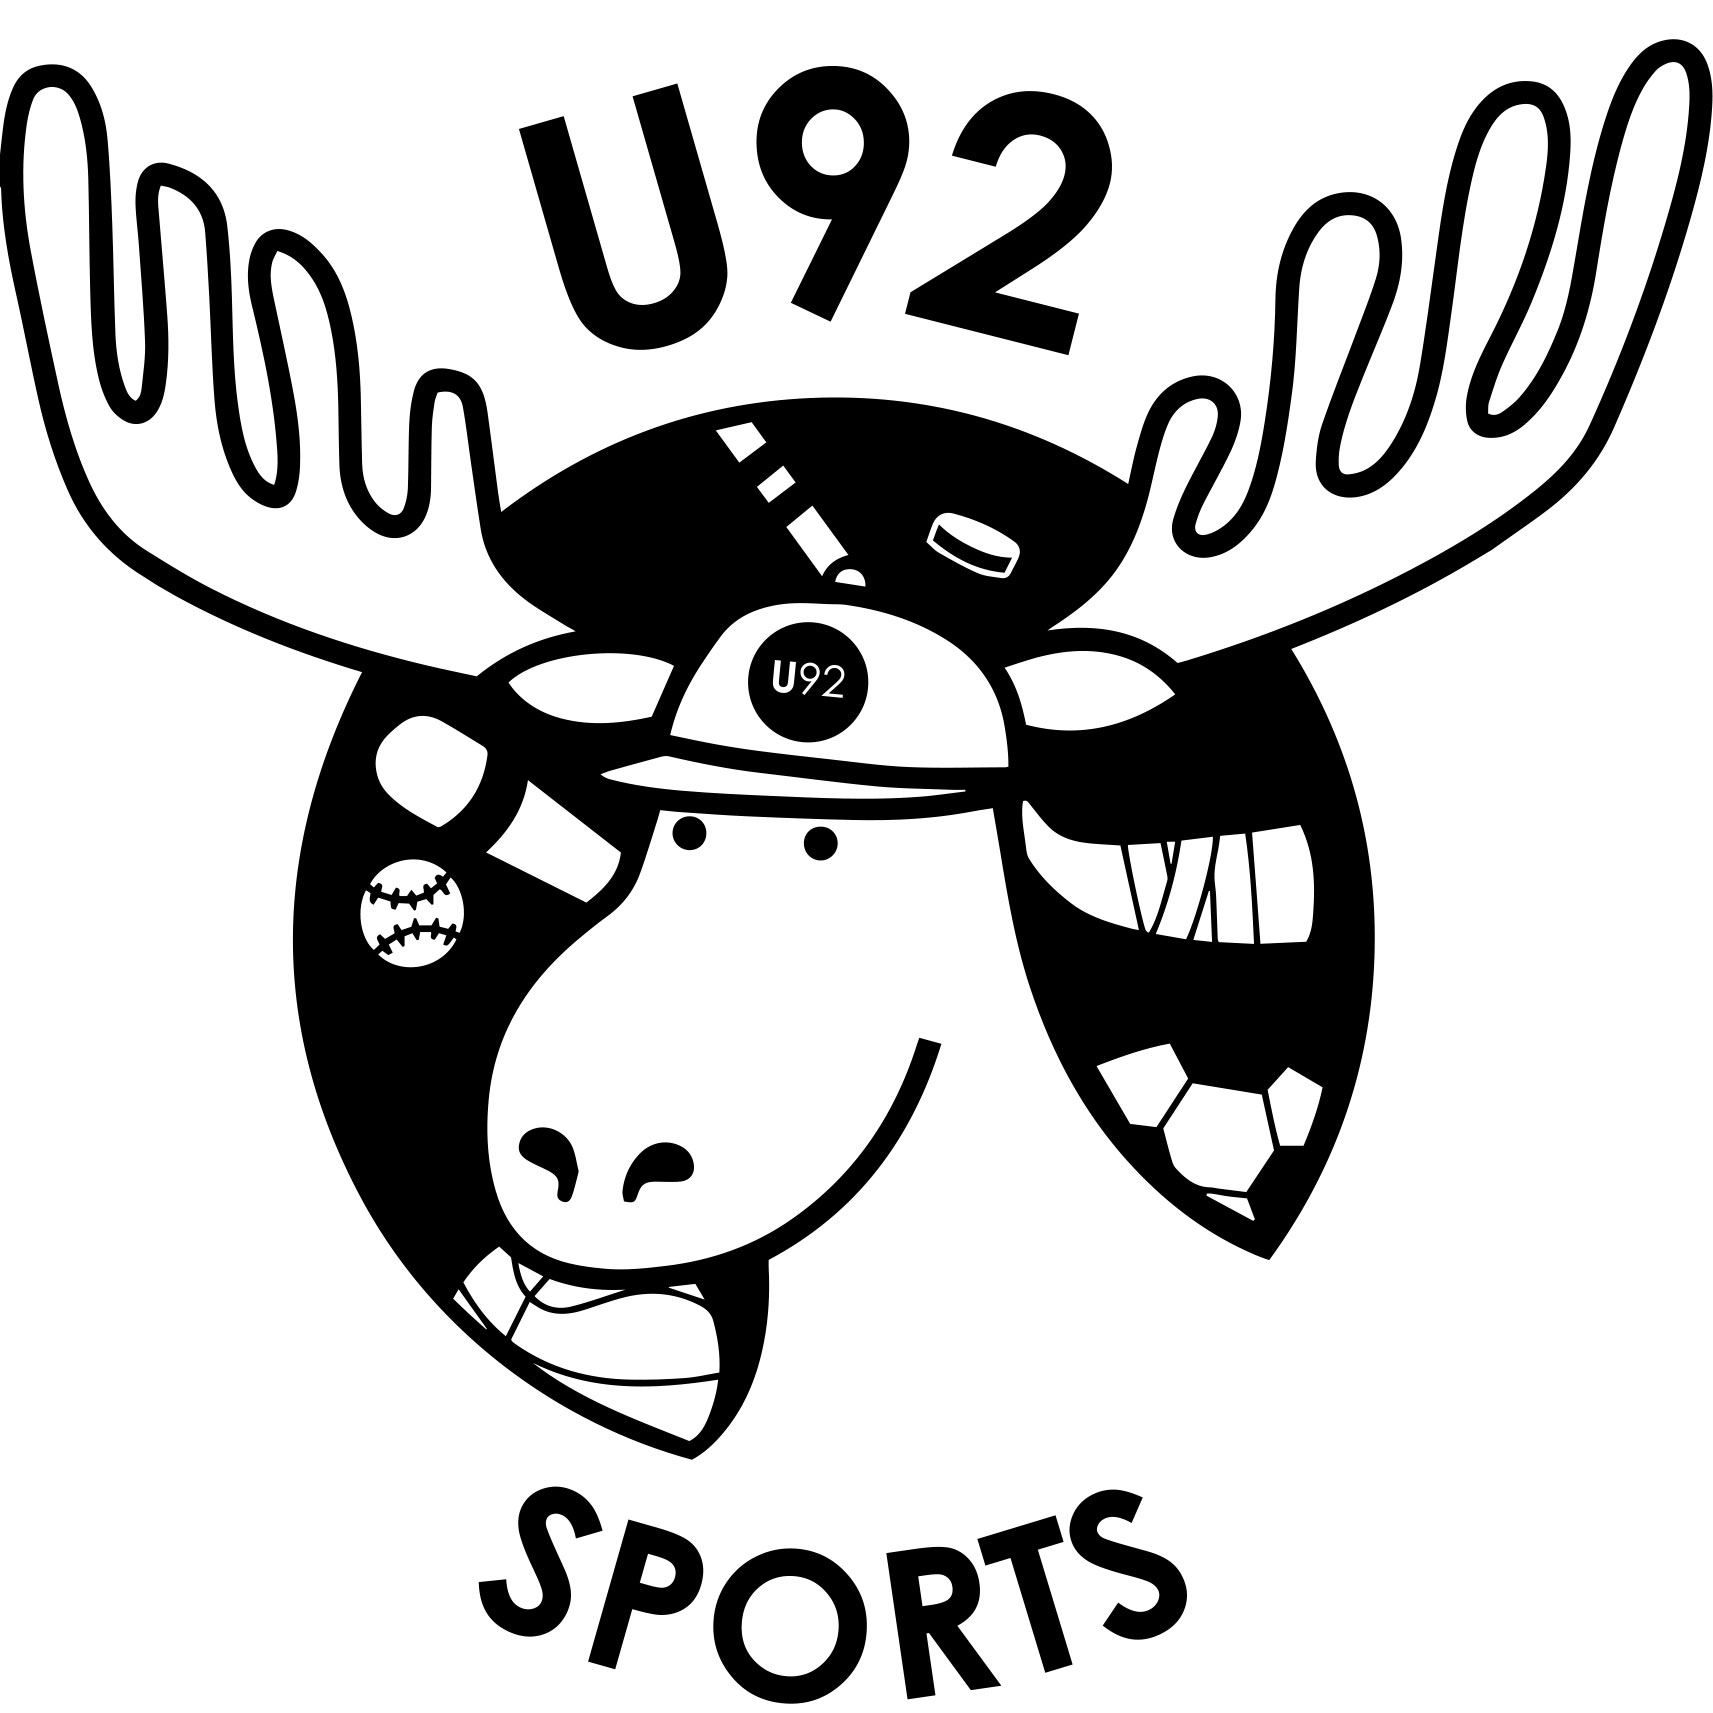 U92 sports logo